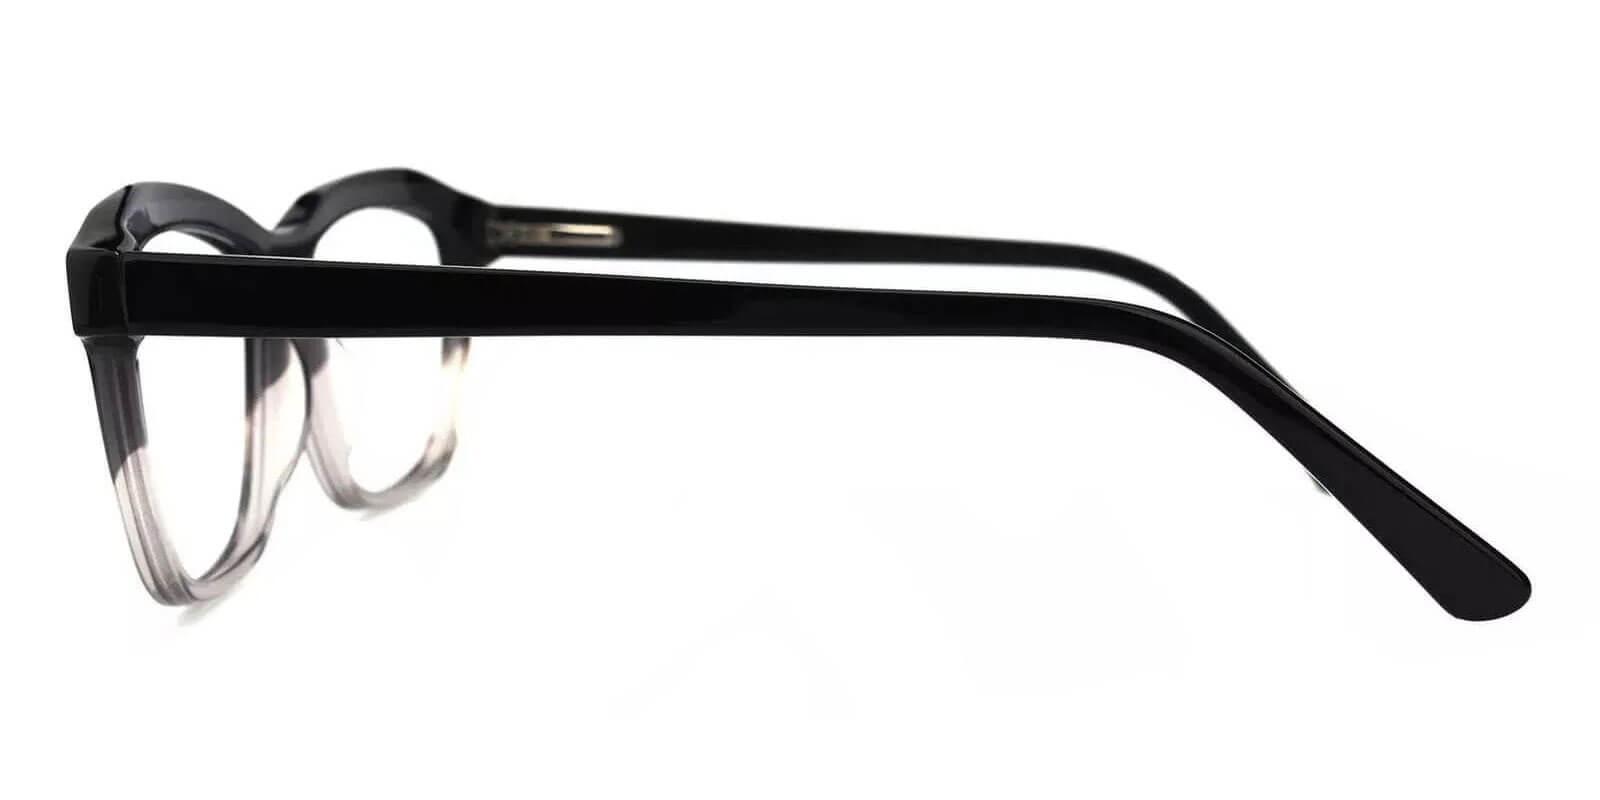 Sonia Translucent Acetate SpringHinges , UniversalBridgeFit , Eyeglasses Frames from ABBE Glasses